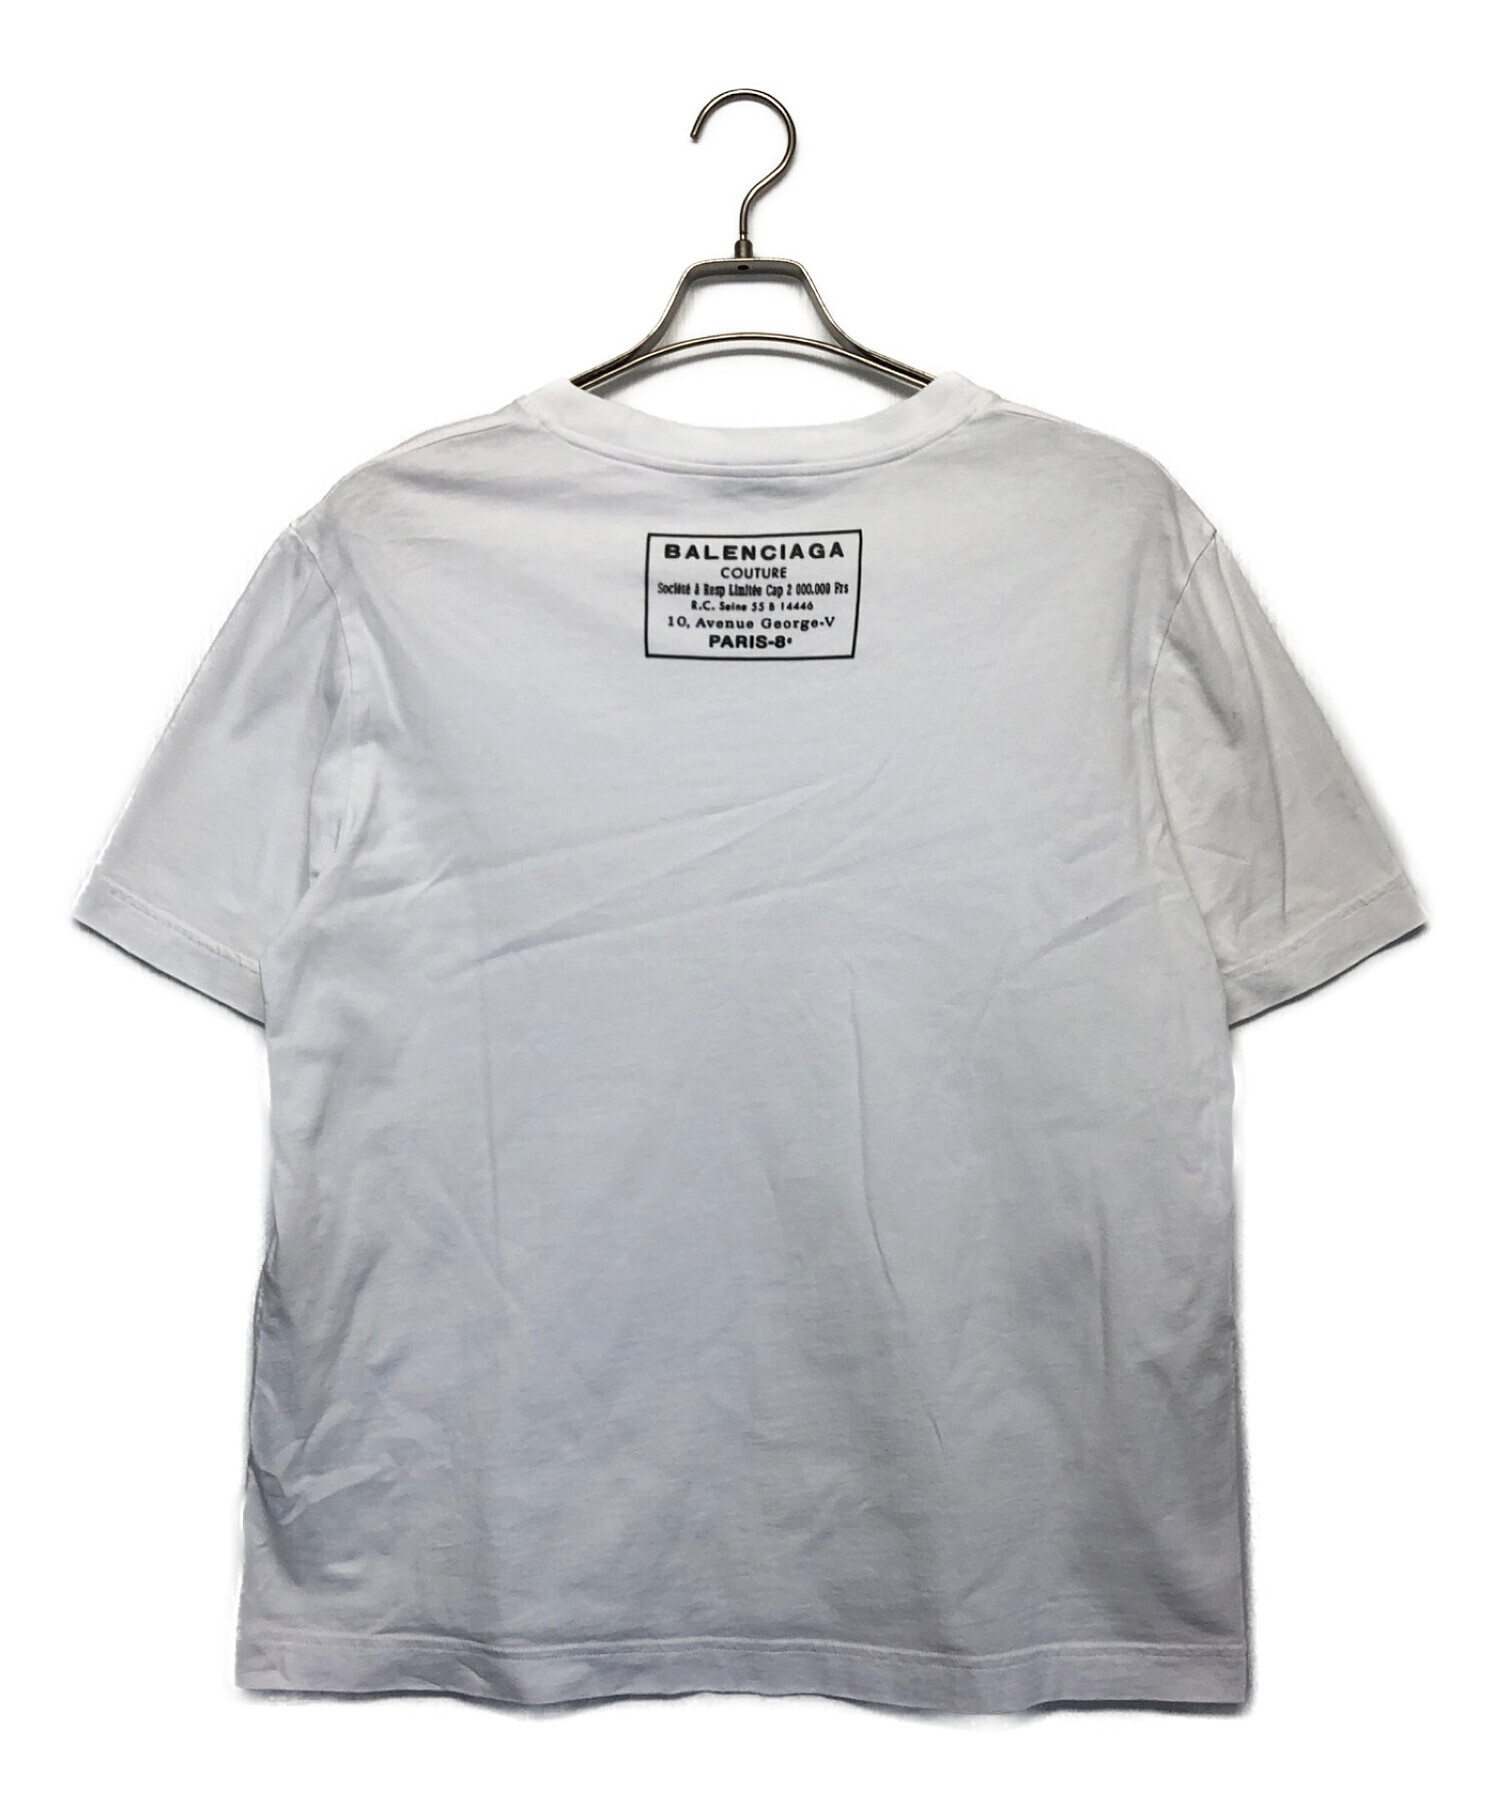 BALENCIAGA (バレンシアガ) クルーネックTシャツ ホワイト サイズ:XL